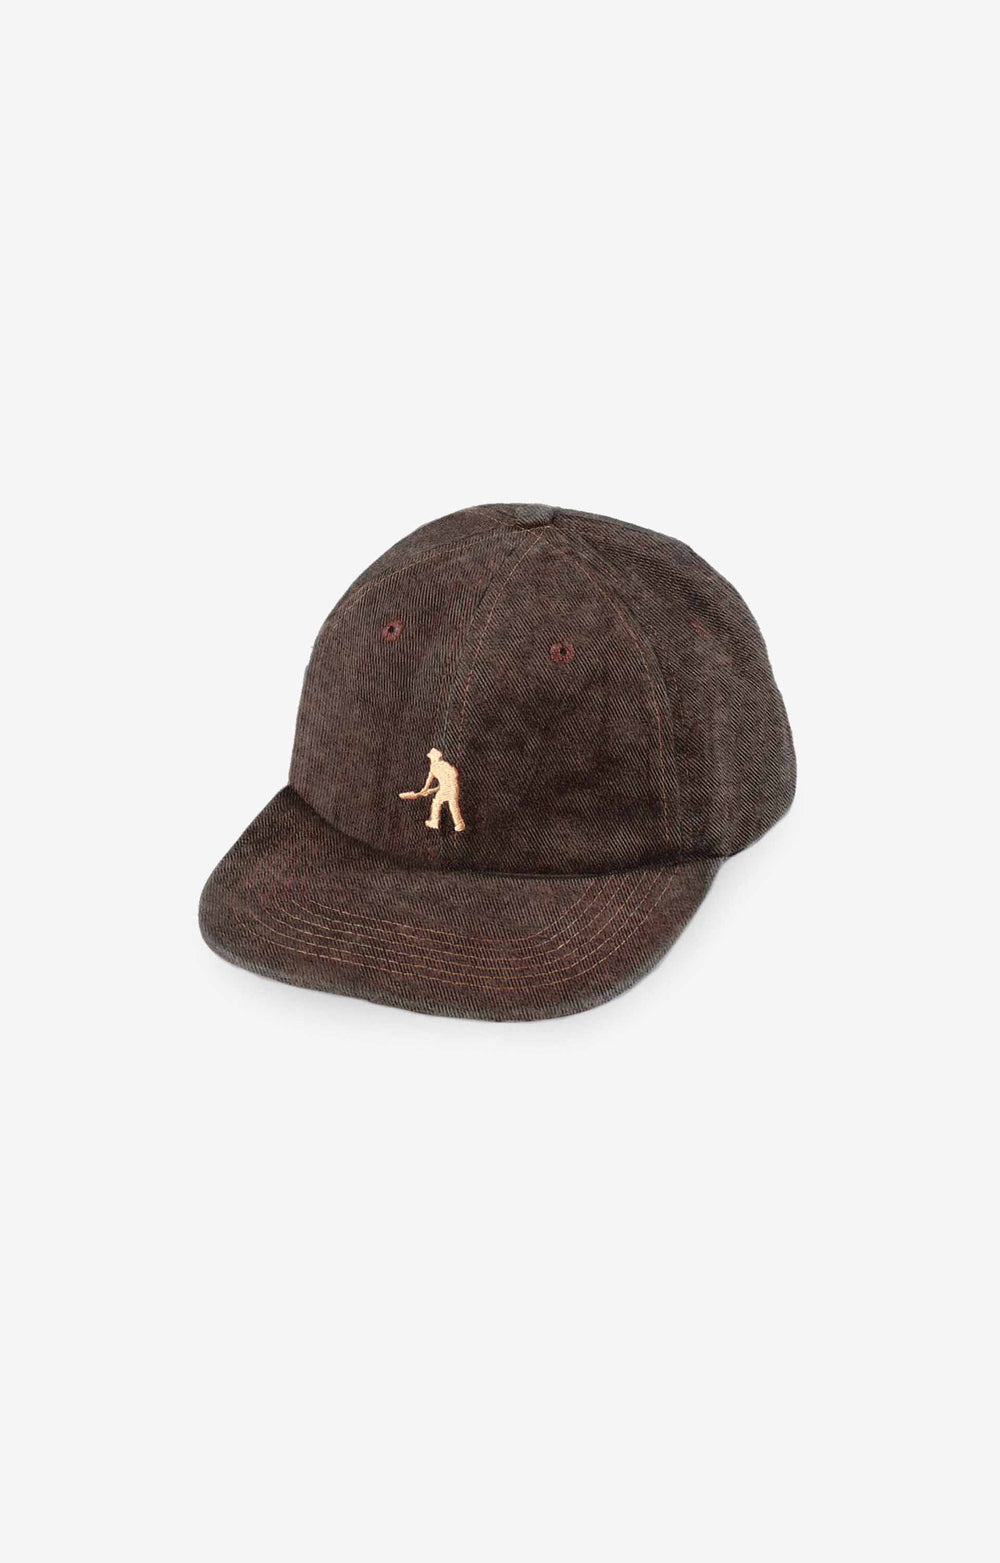 Pass~Port Workers Club Denim Cap Headwear, Brown